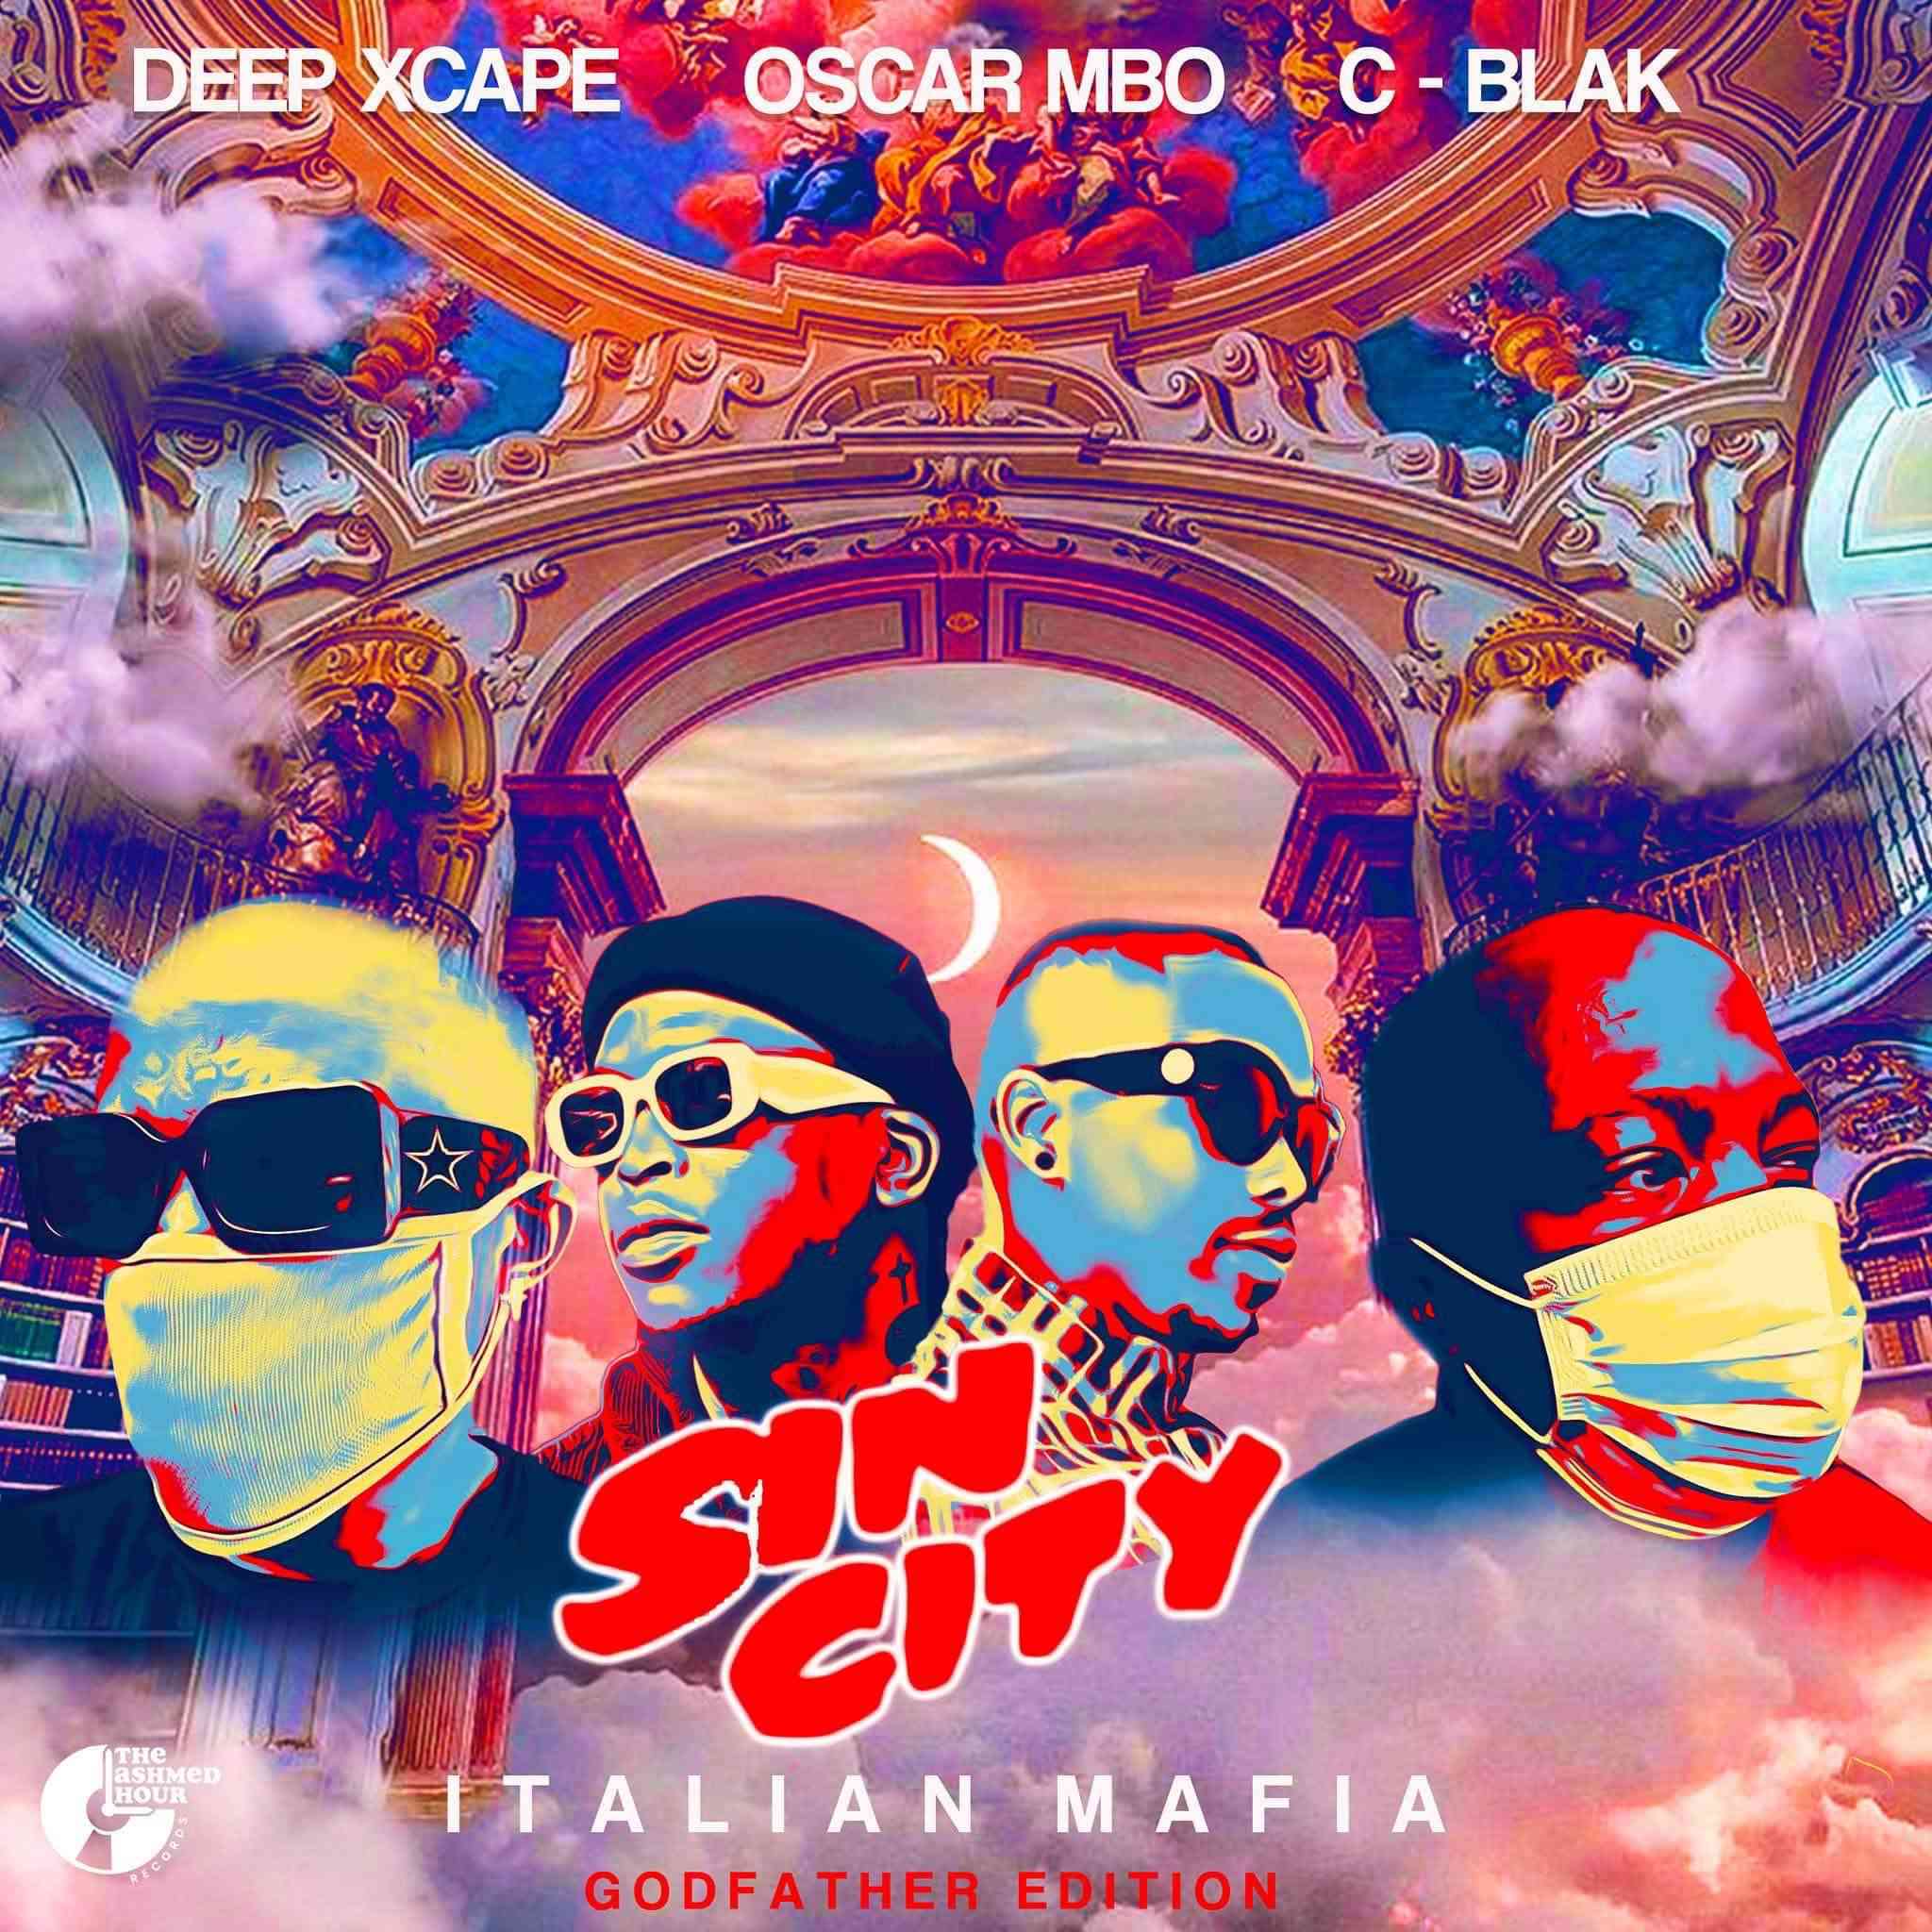 Deep Xcape, Oscar Mbo & C-Blak Extends "Sin City" With (Italian Mafia (God Father Edition))